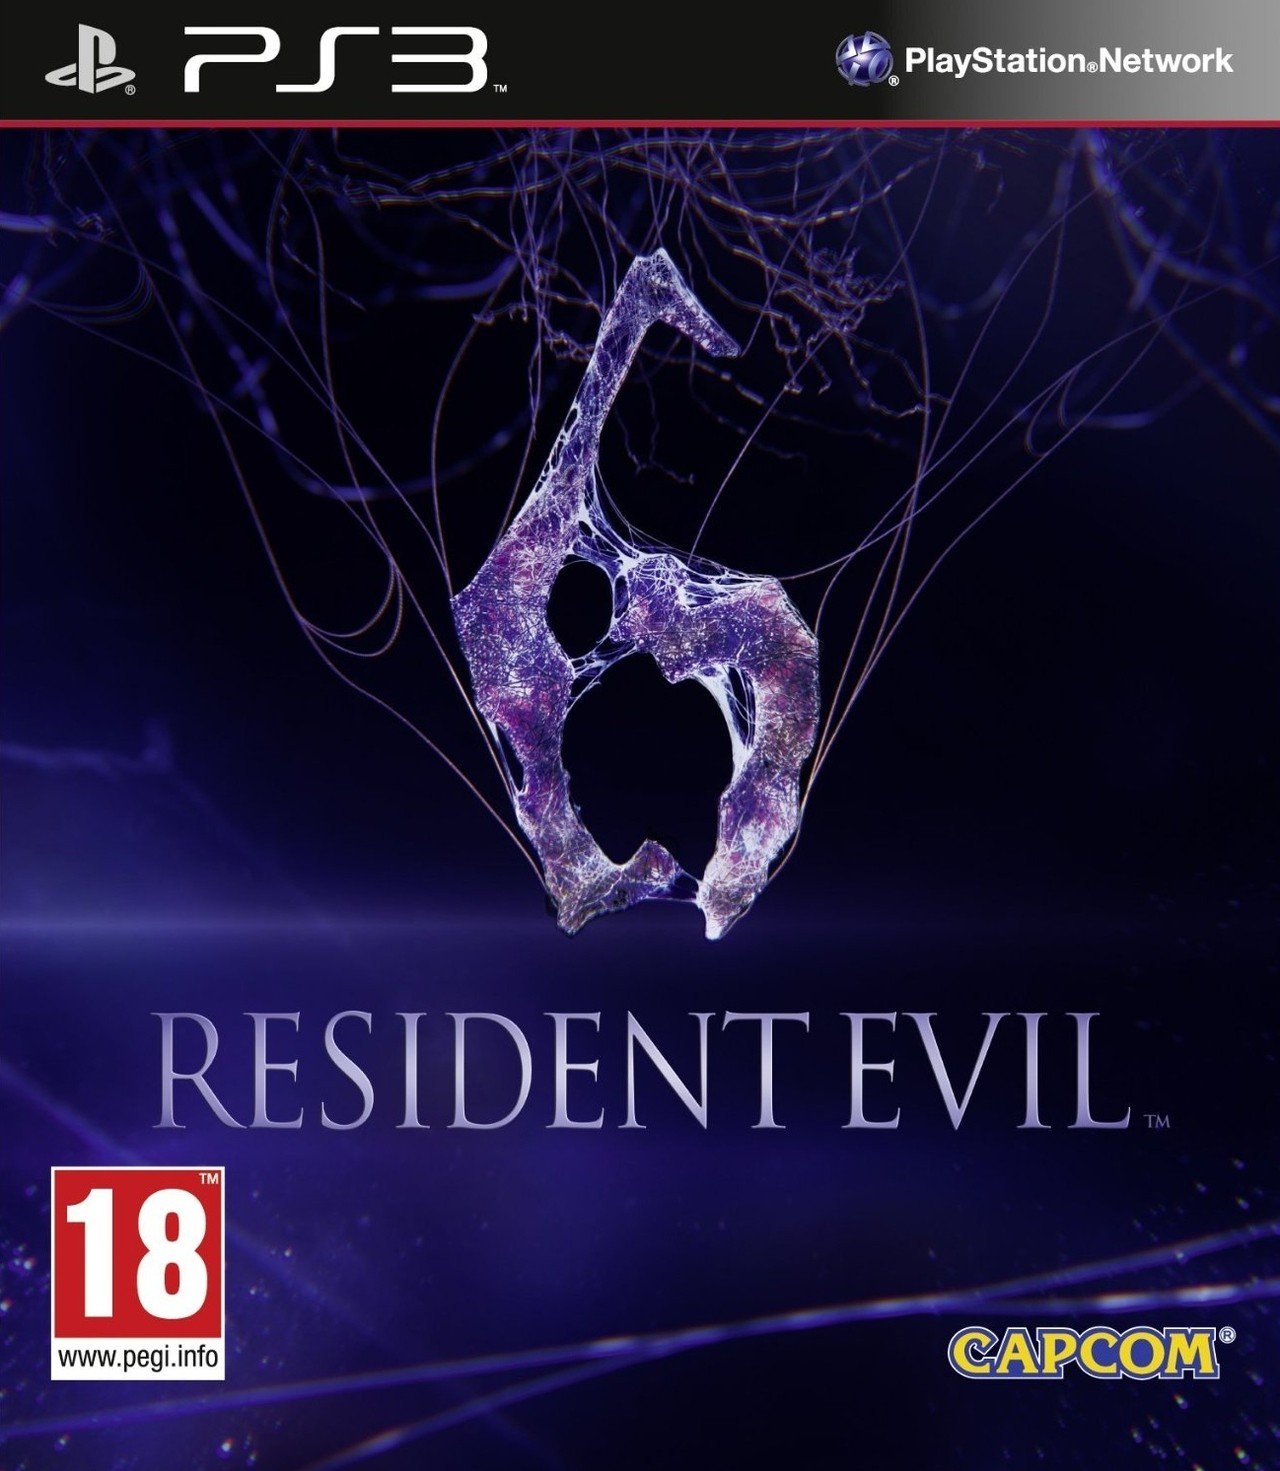 Resident Evil 6 sur PlayStation 3 - jeuxvideo.com - 1280 x 1471 jpeg 484kB